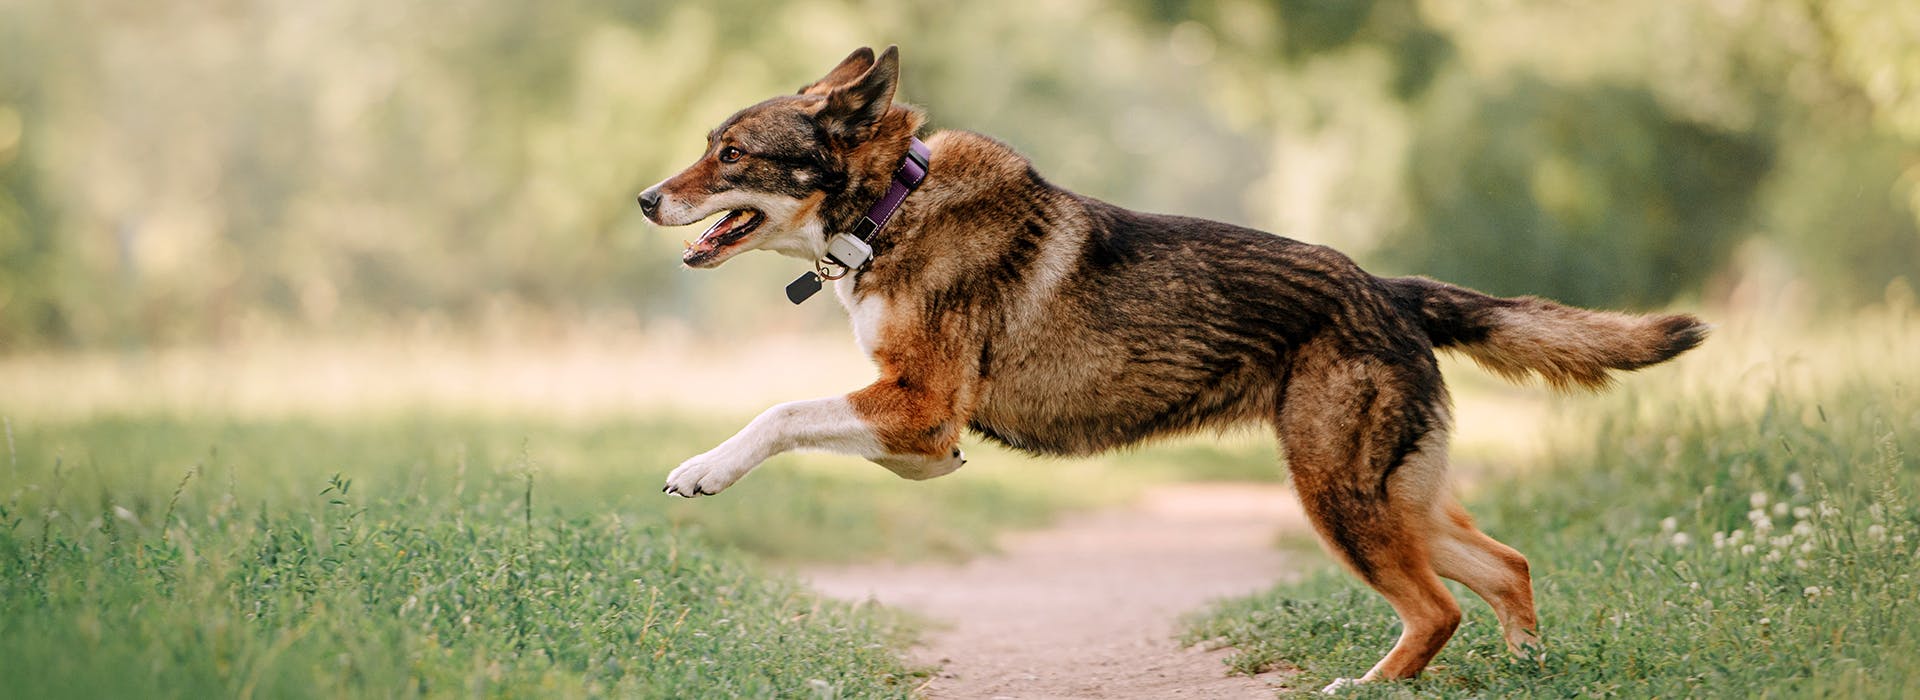 A dog, wearing a gps tracking collar, running through a park